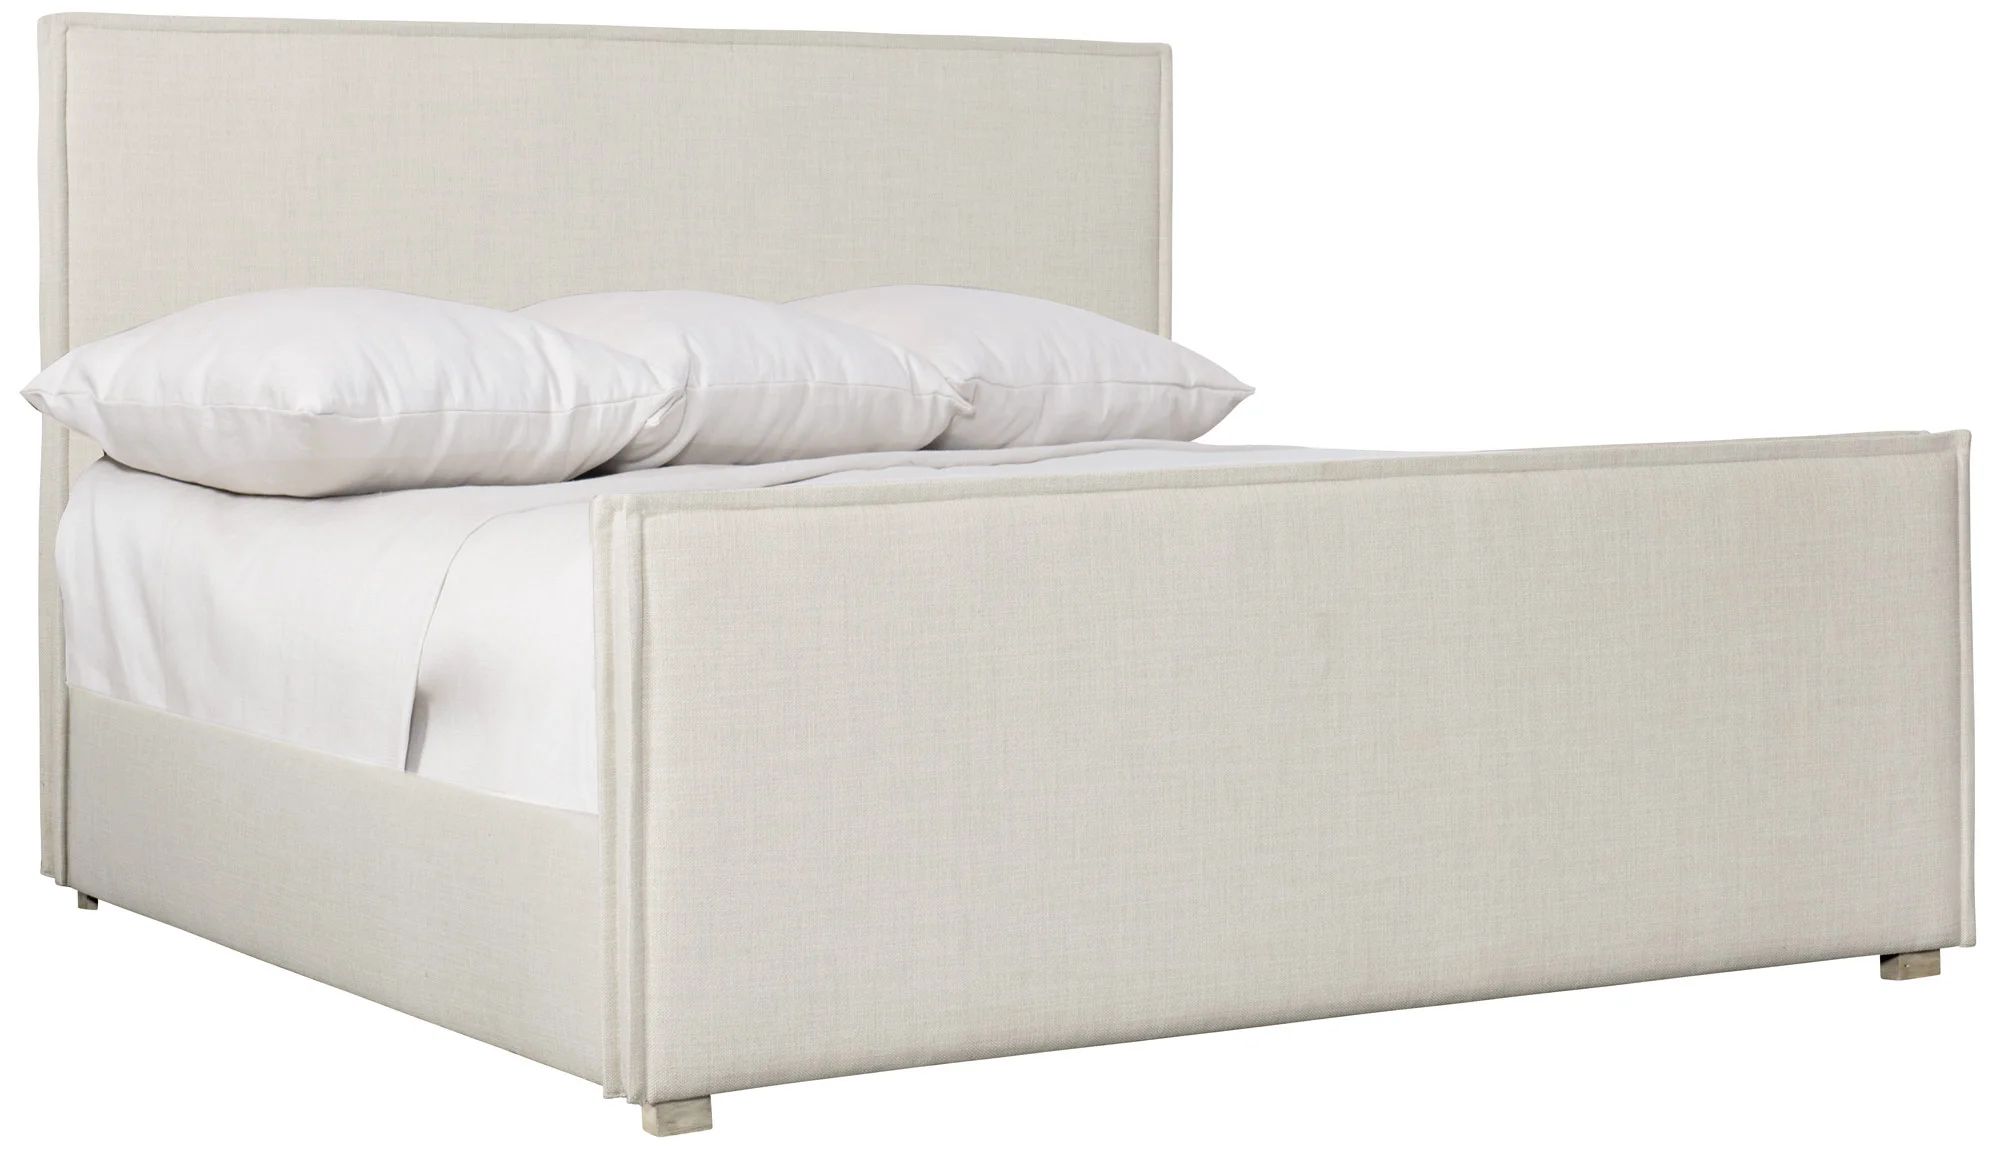 Highland Park Upholstered Bed | Wayfair North America